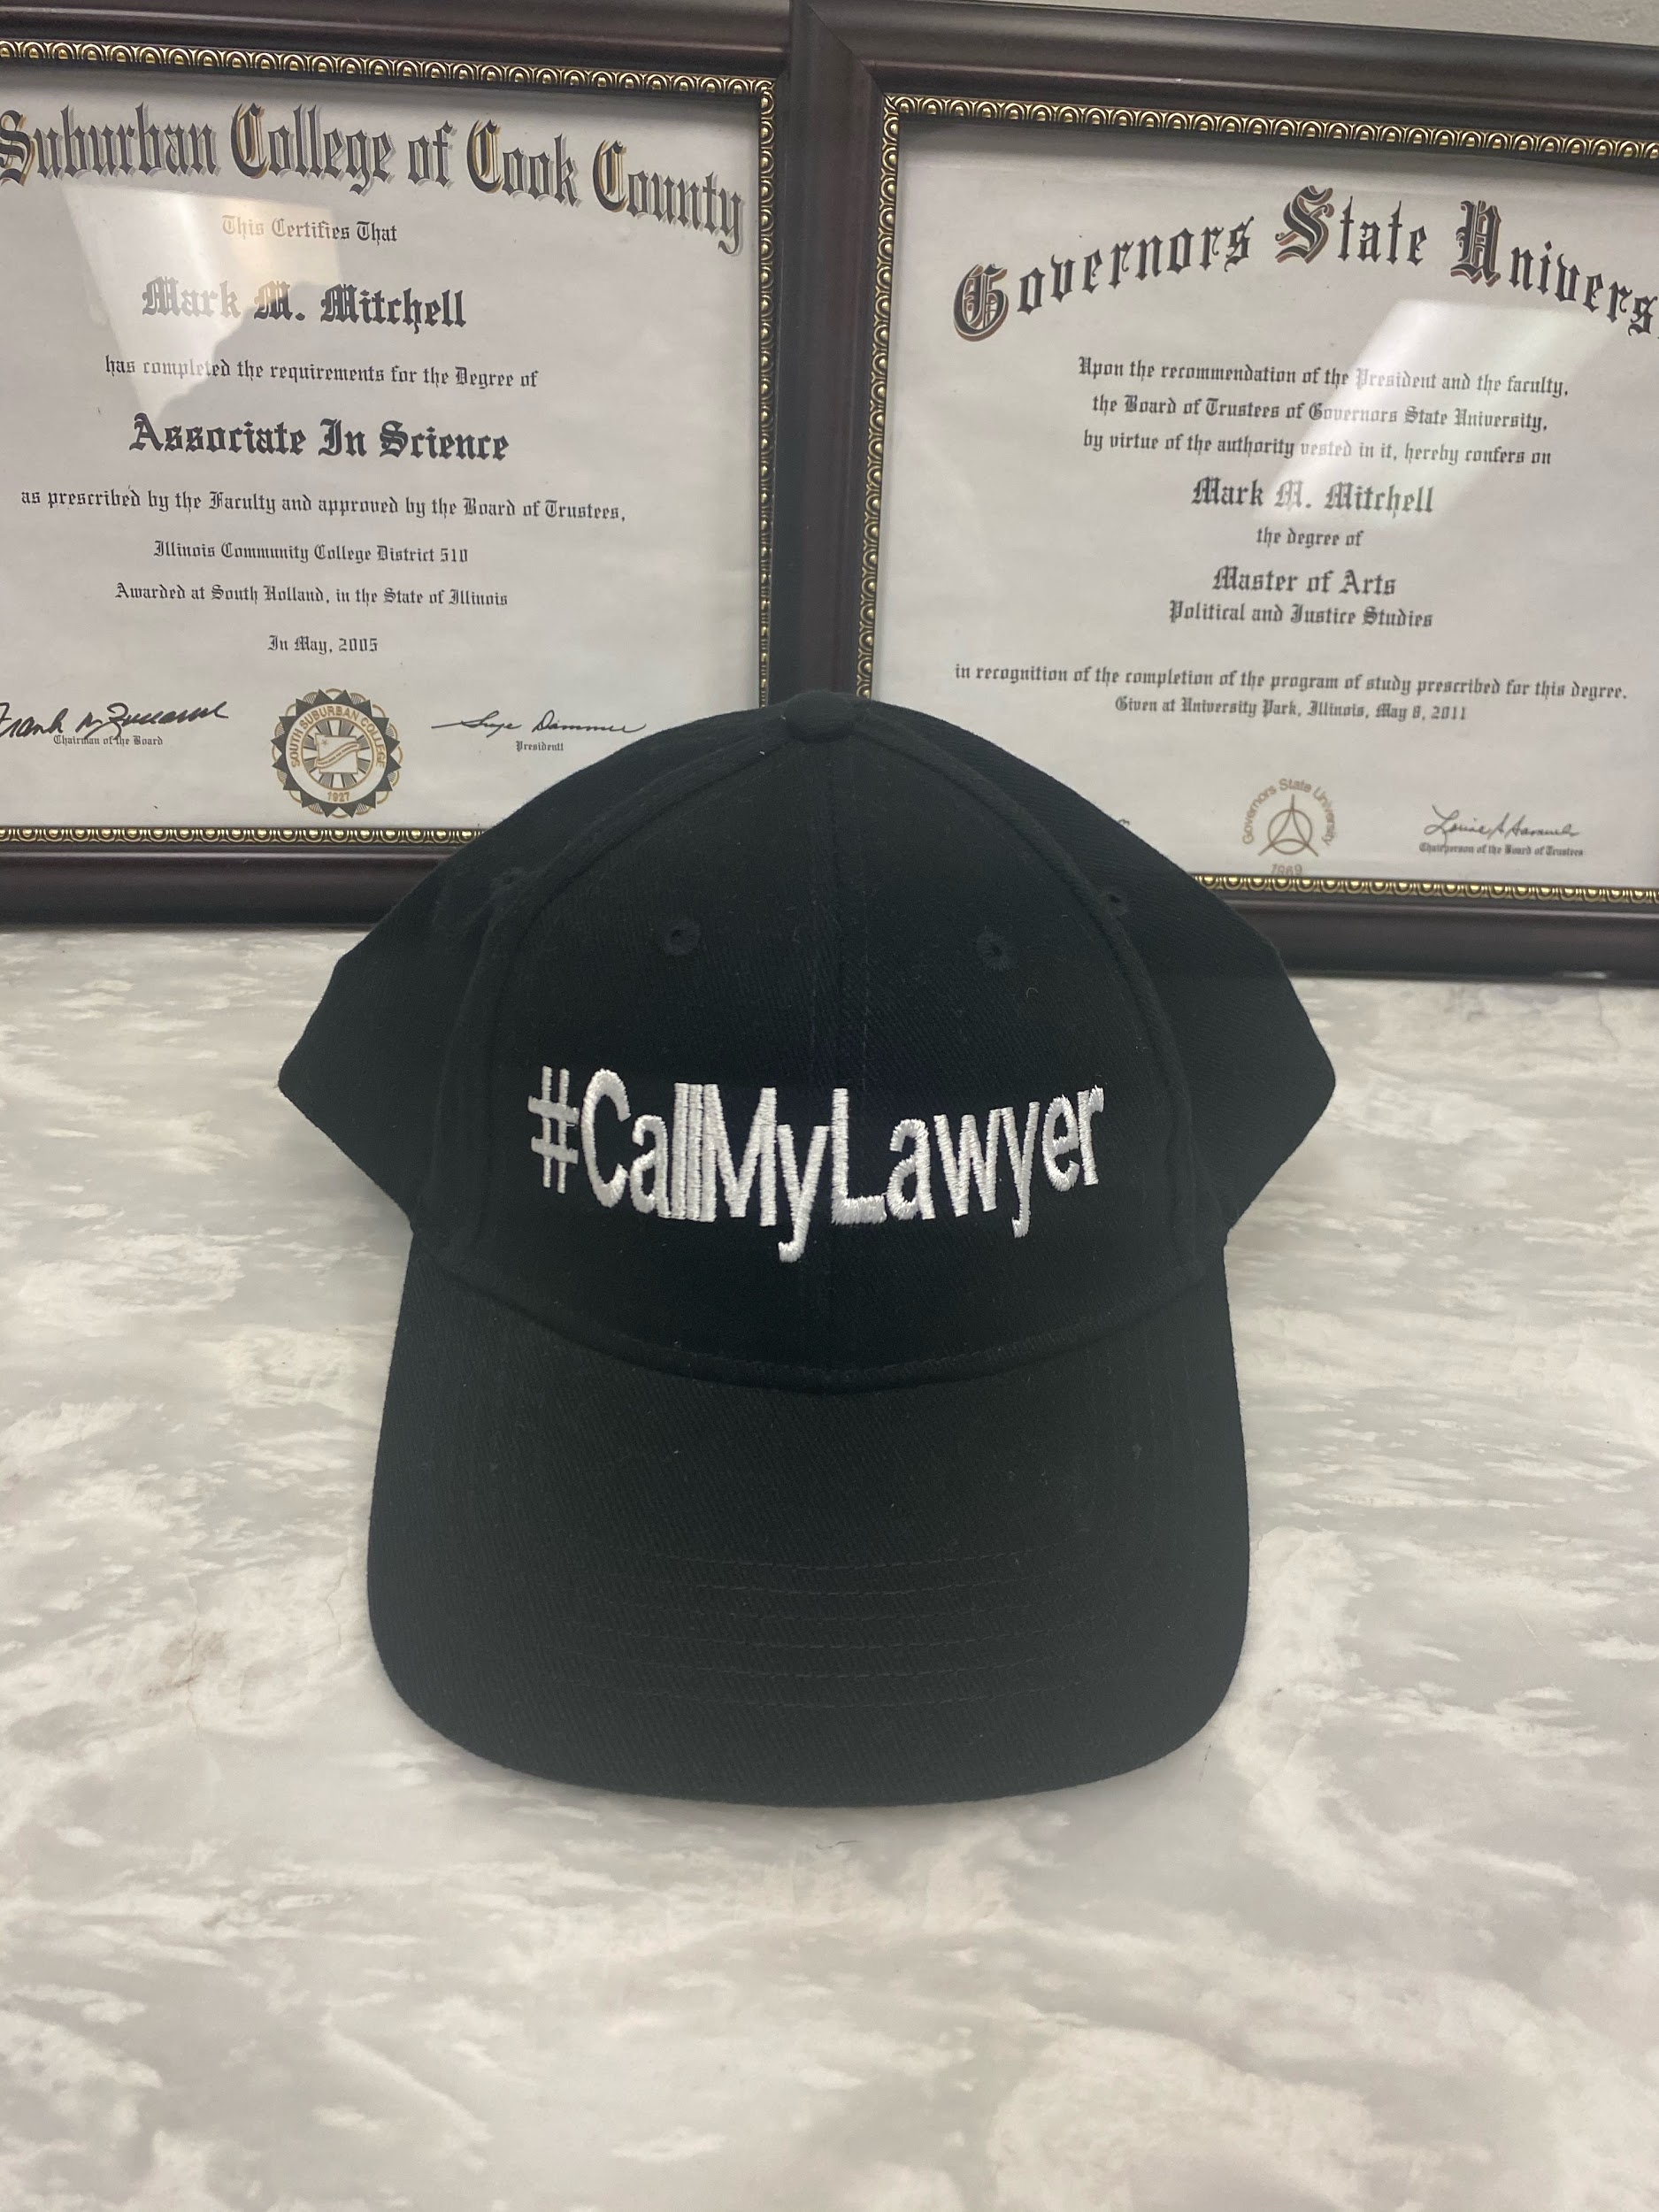 lawyer cap